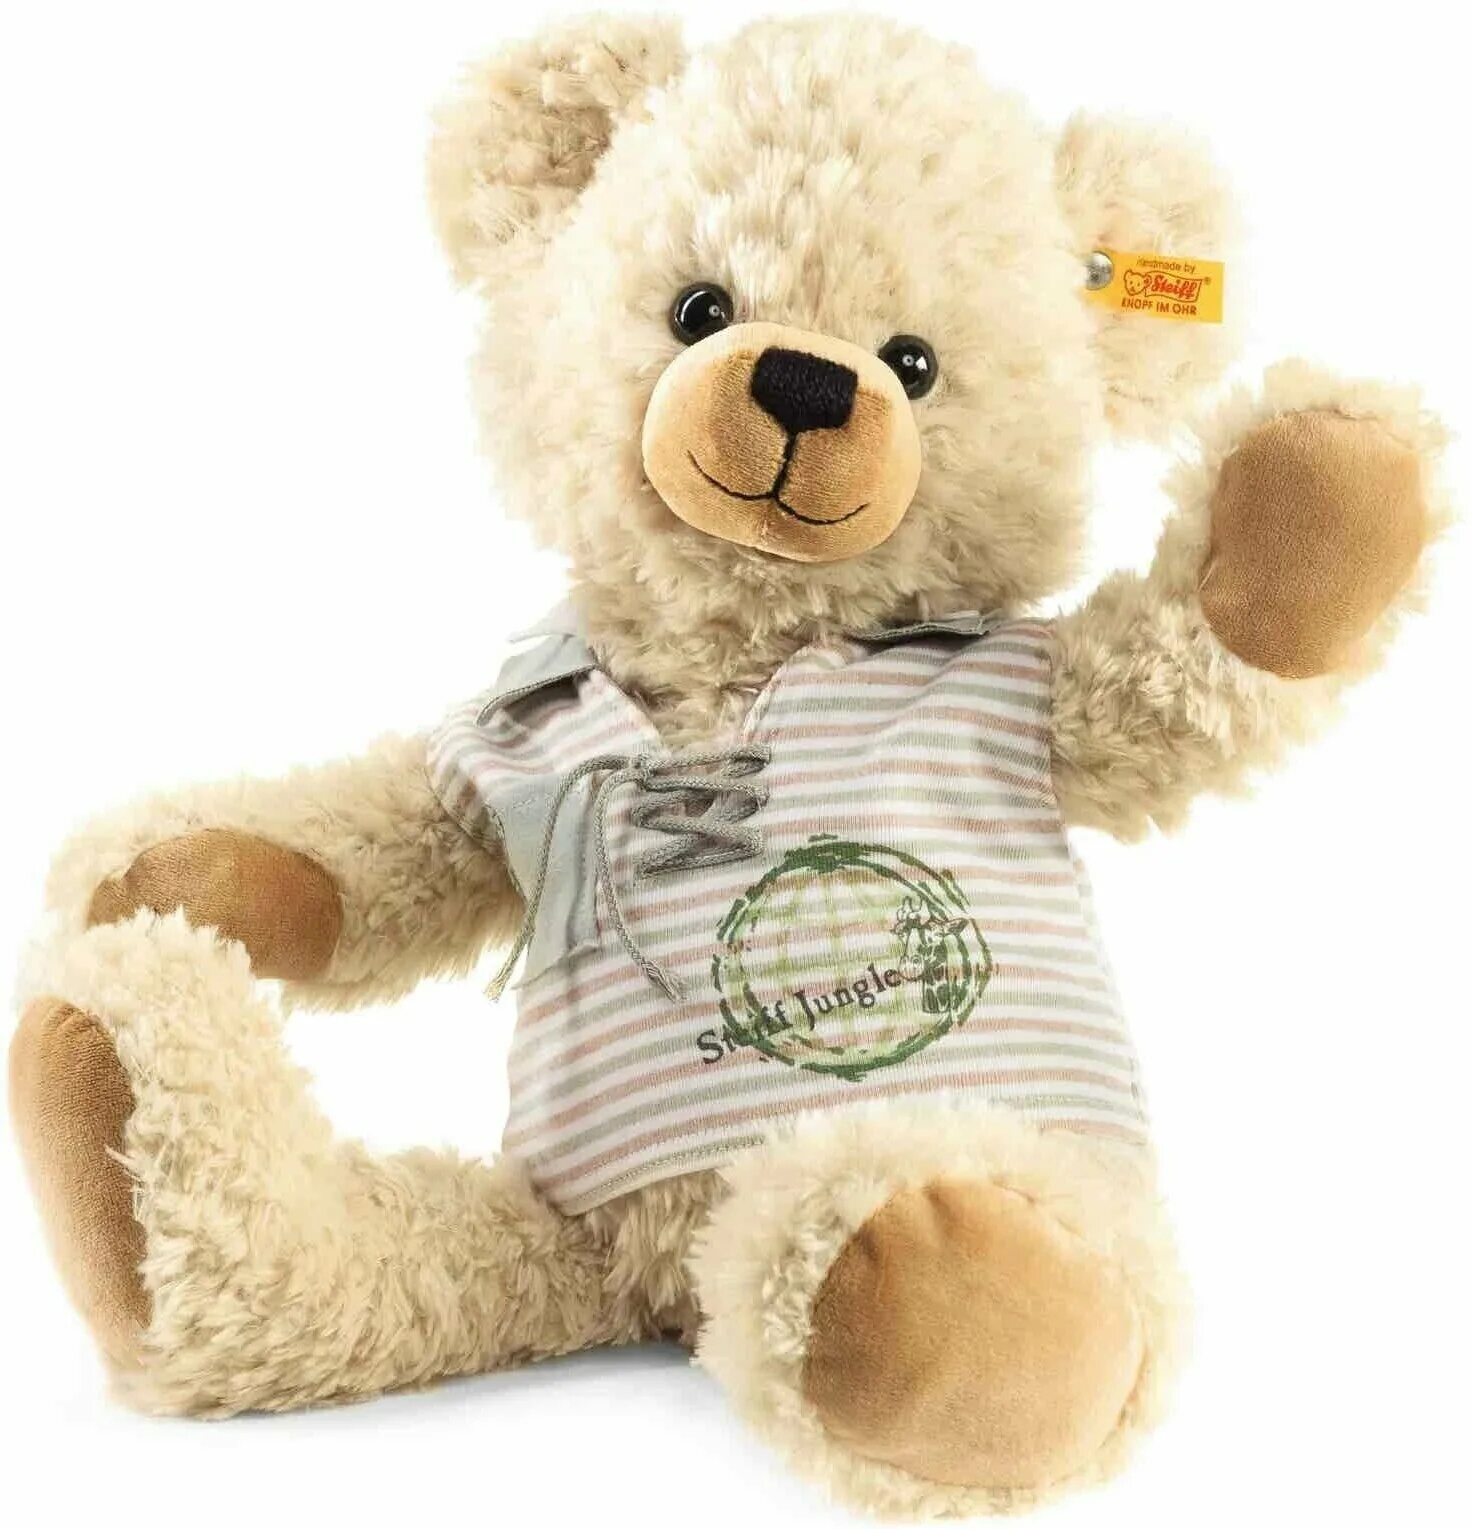 Мишка Тедди Штайф 40см. Плюшевый медведь Steiff Teddy. Мягкие игрушки Steiff. Мишка Тедди от Steiff $2.1 млн.